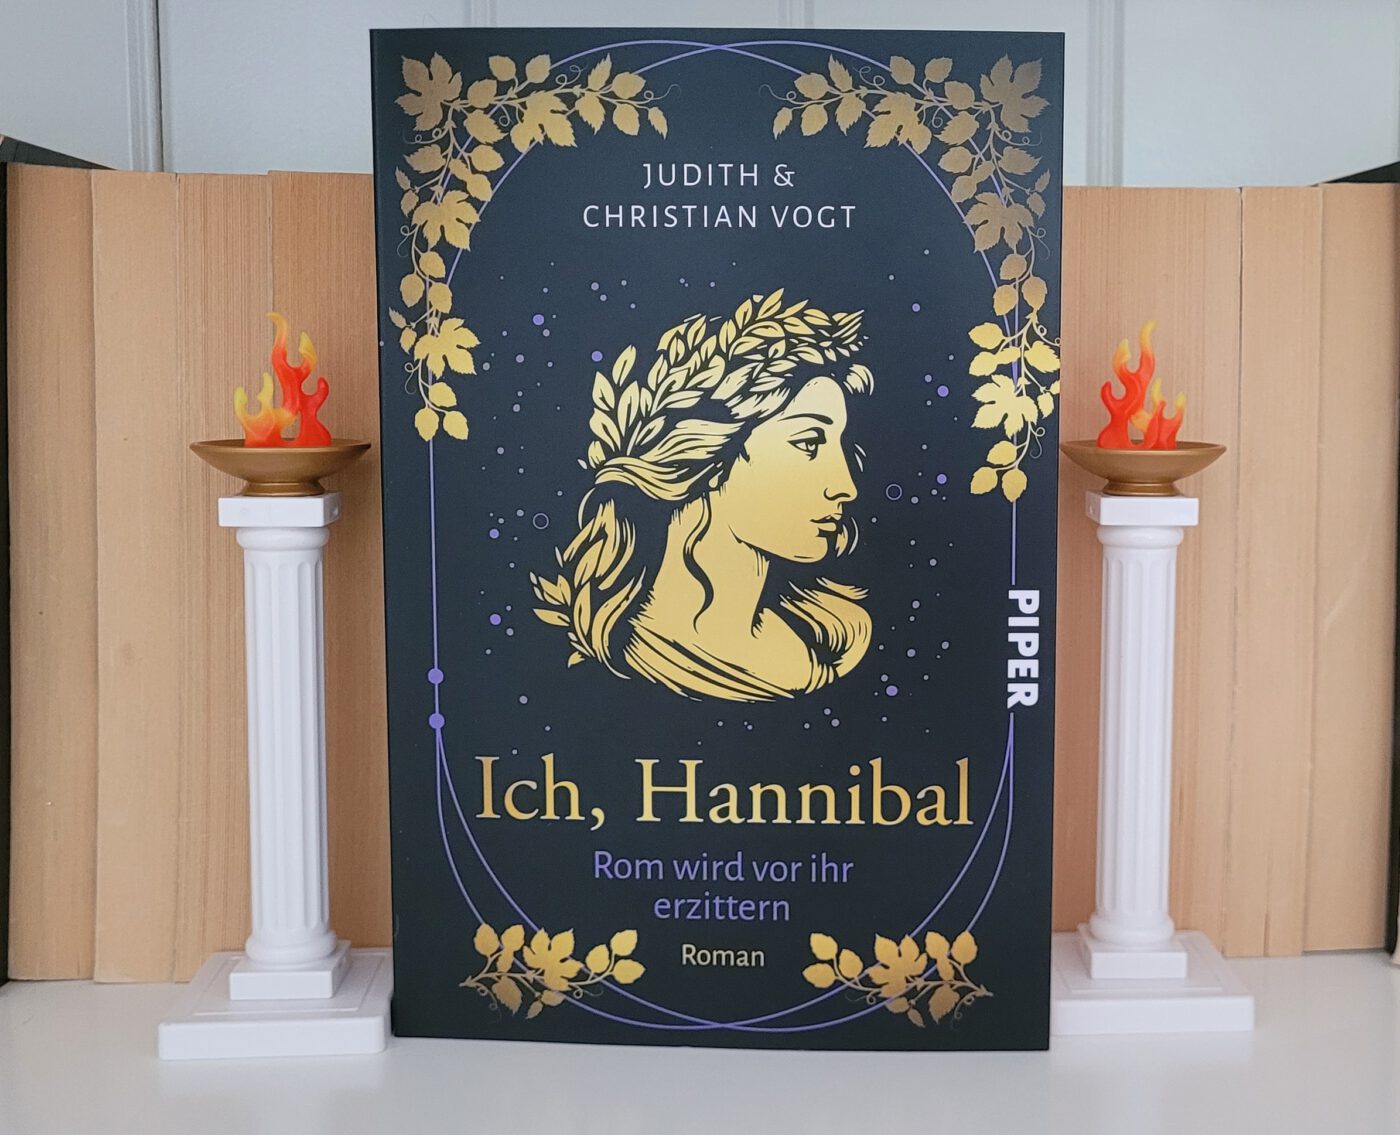 Judith & Christian Vogts Roman "Ich, Hannibal" in meinem Bücherregal (Photo: Michael Kleu)